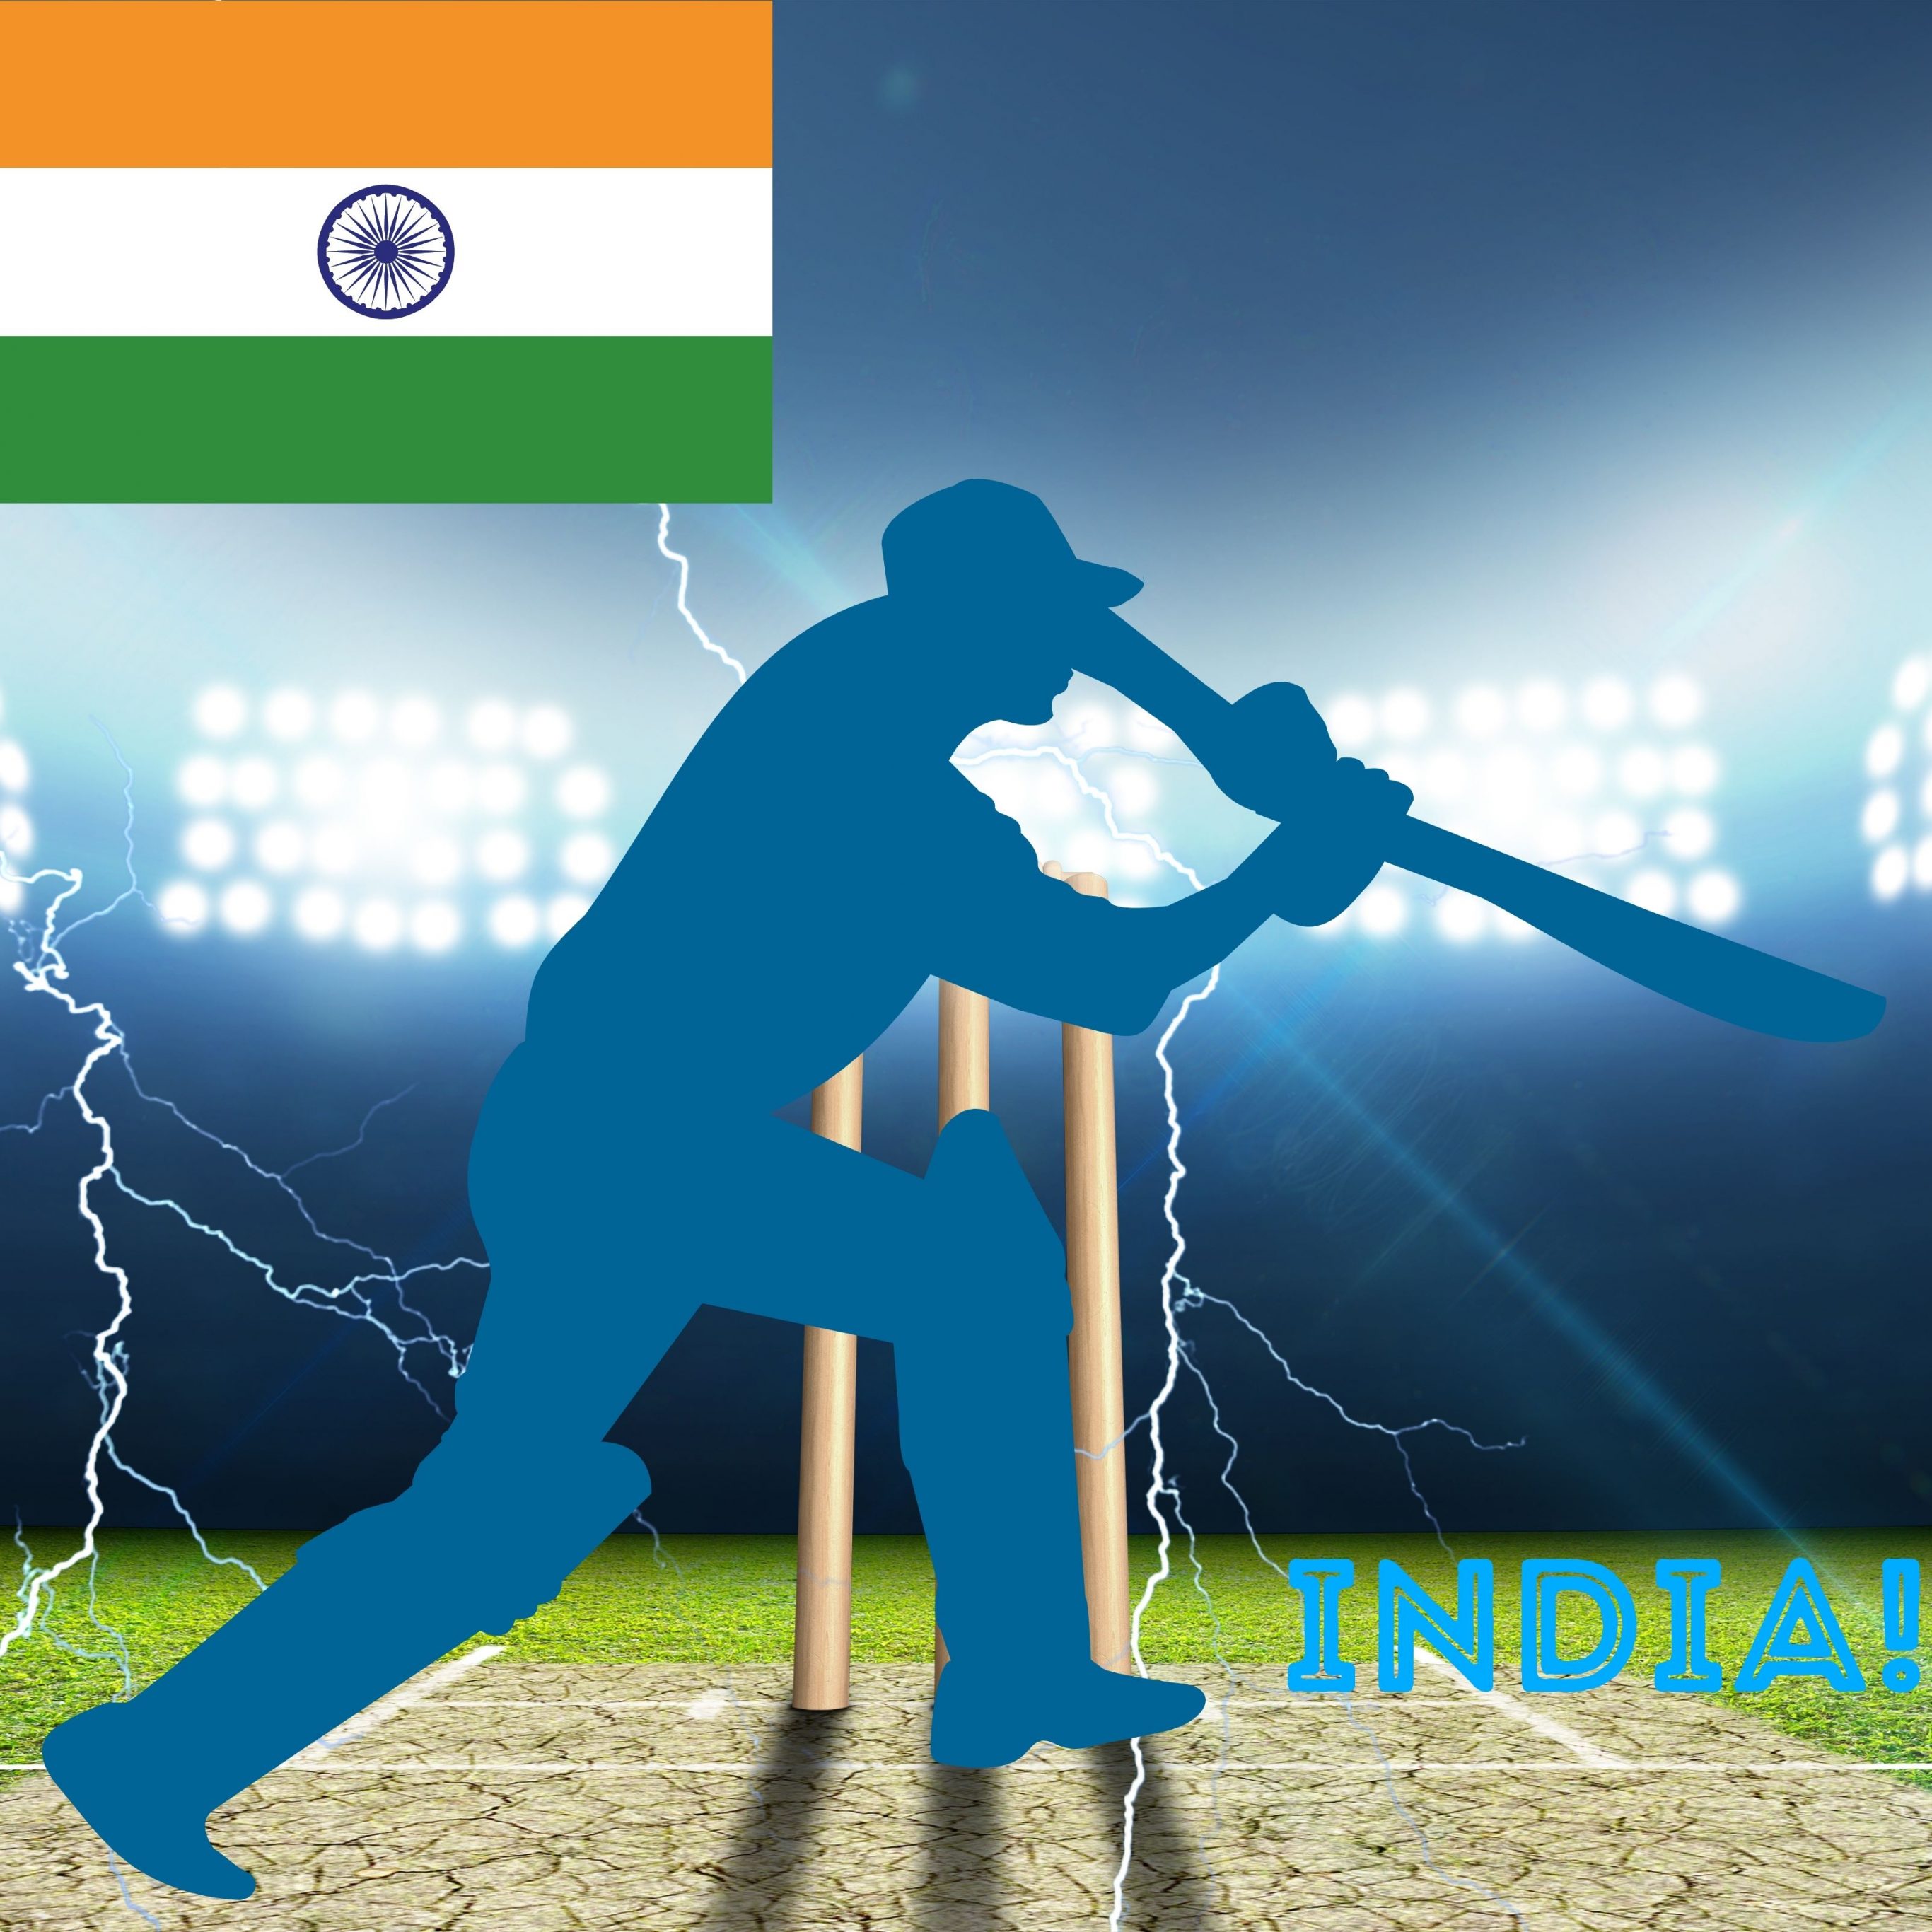 iPad Pro 12.9 wallpapers India Cricket Stadium iPad Wallpaper